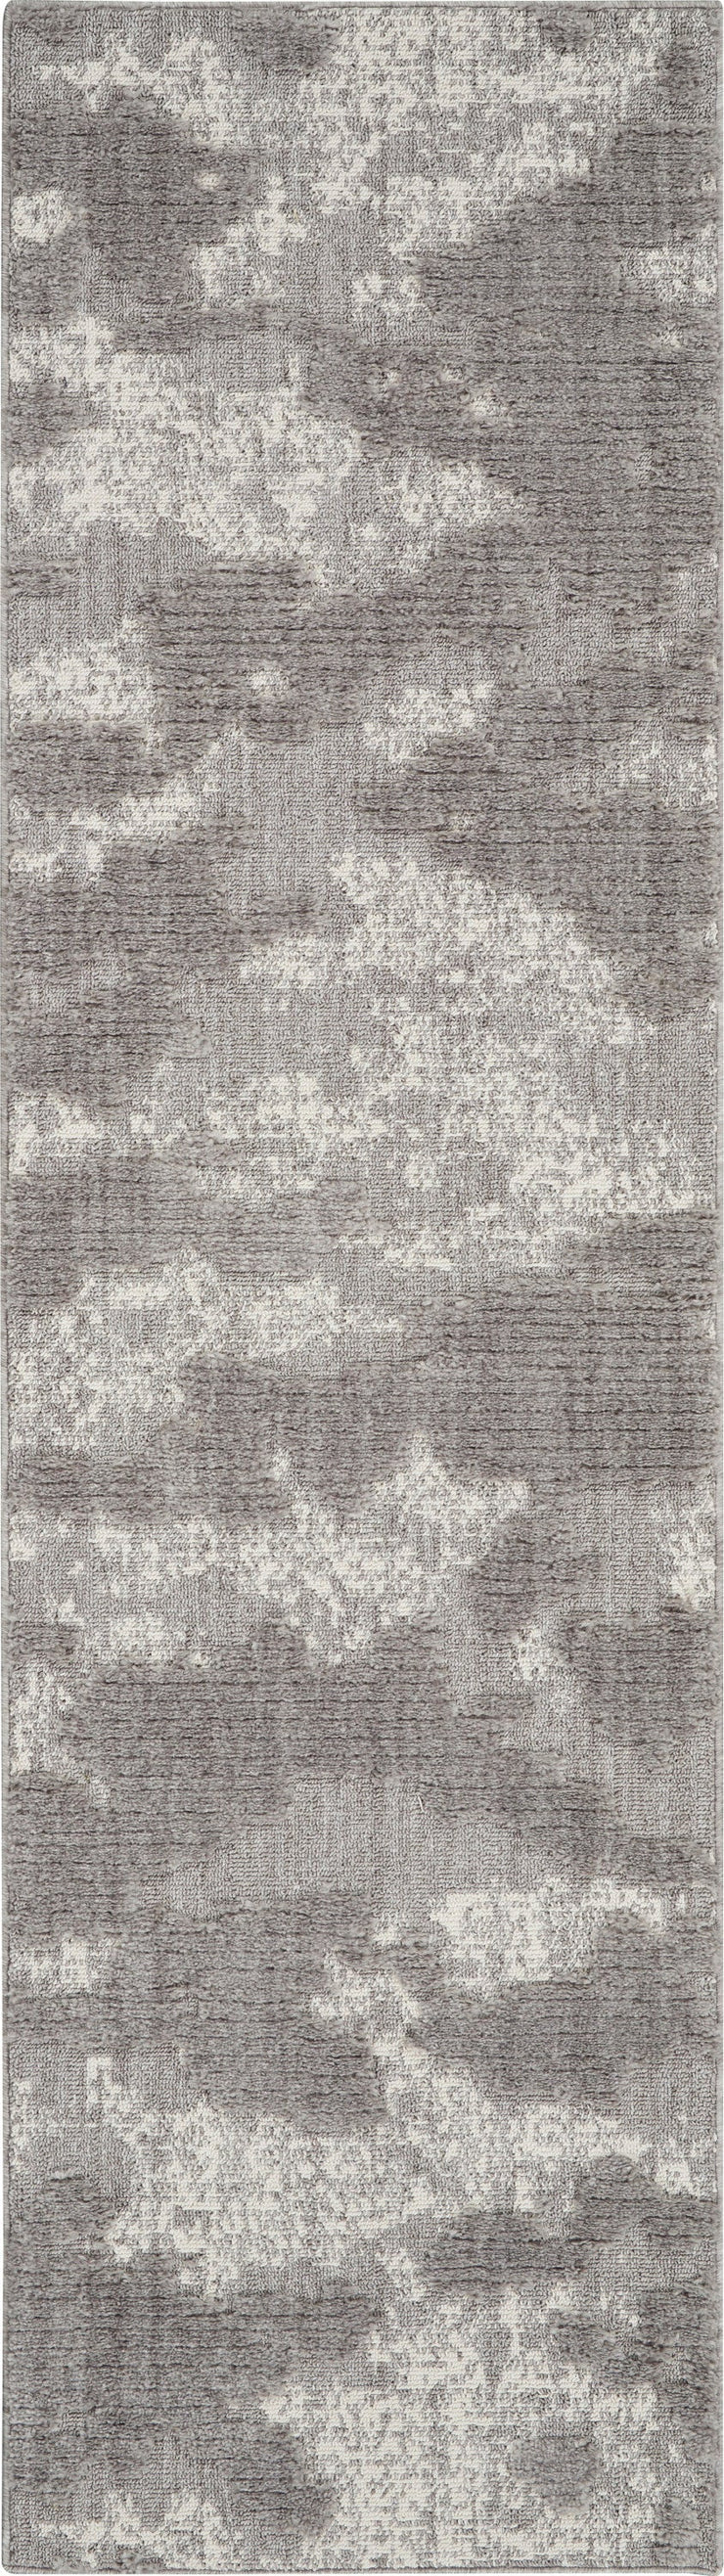 zermatt grey ivory rug by nourison 99446759320 redo 2